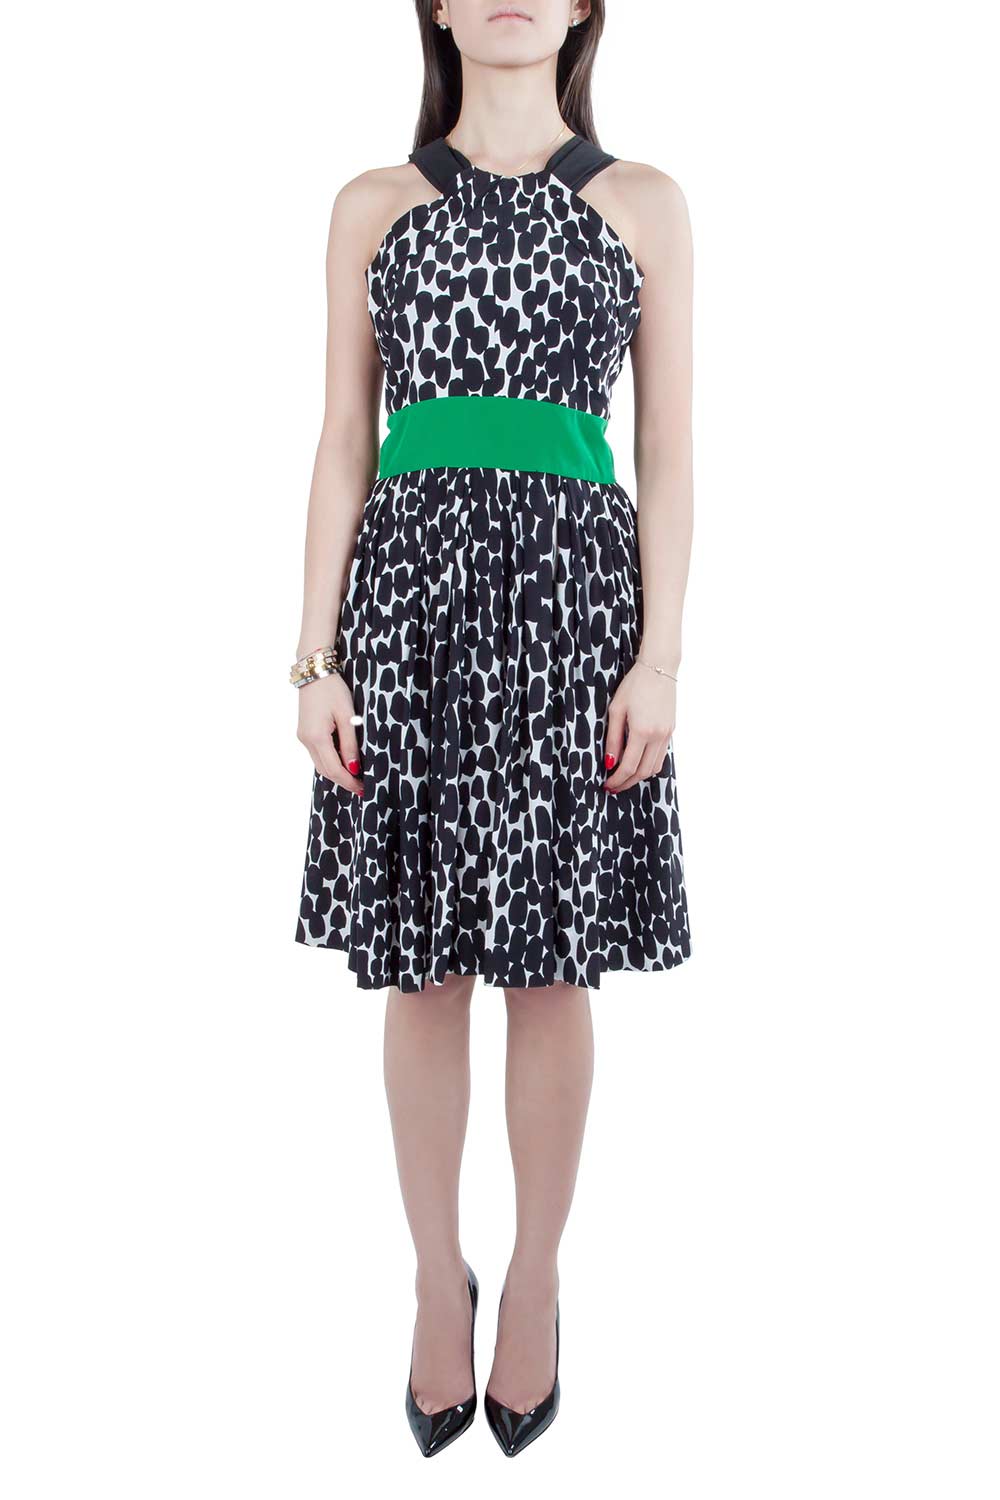 Gucci Monochrome Polka Dot Print Silk Contrast Waistband Sleeveless Dress M